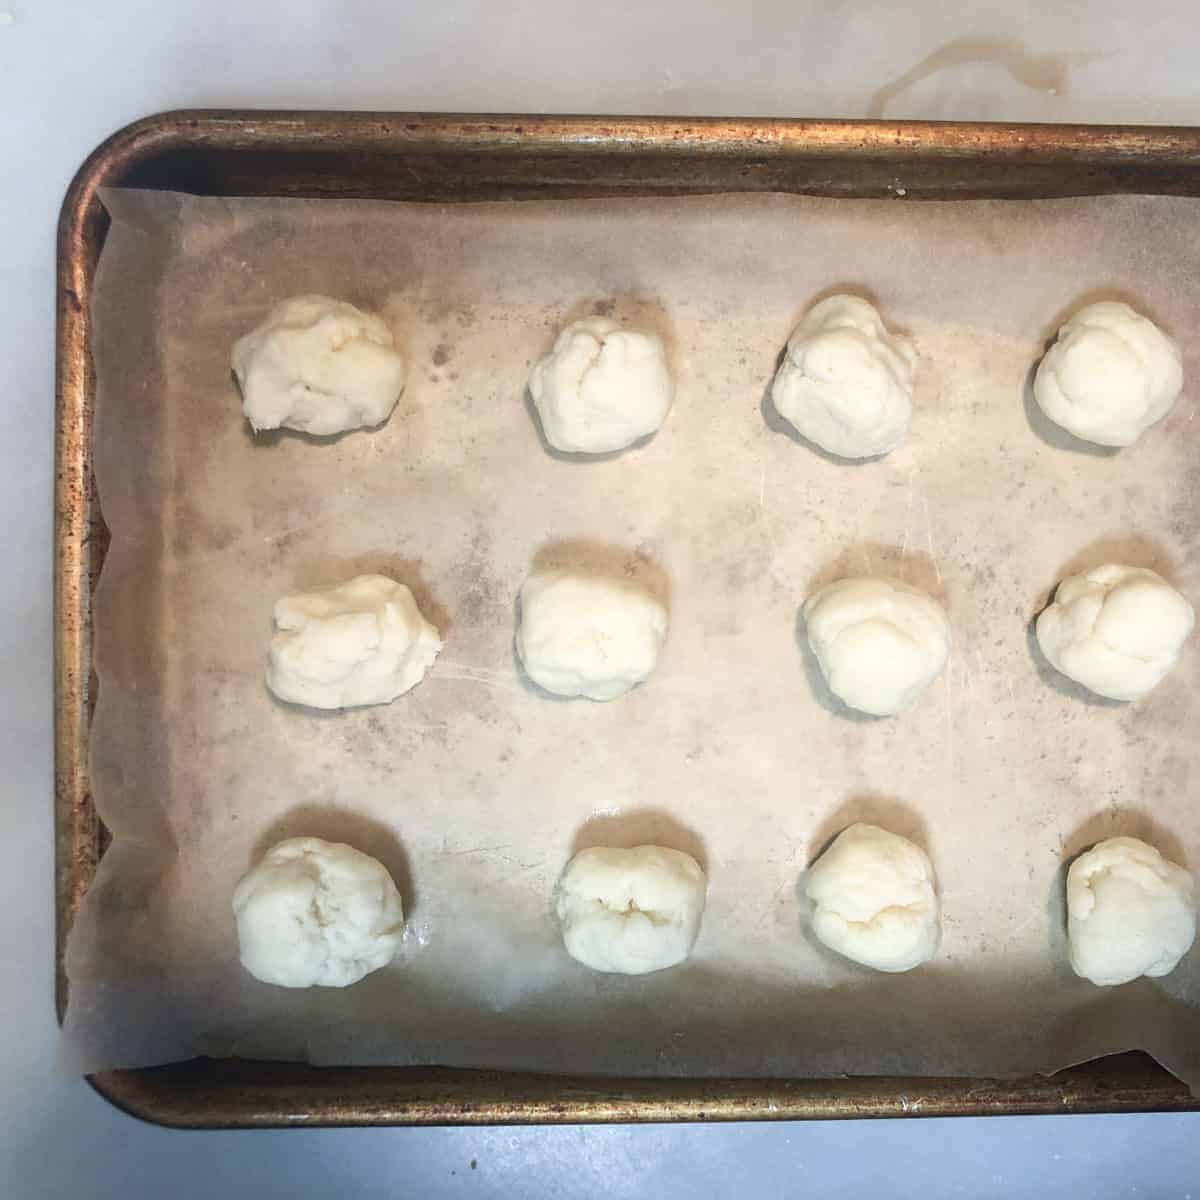 lemon curdcookie dough ballson baking sheet.